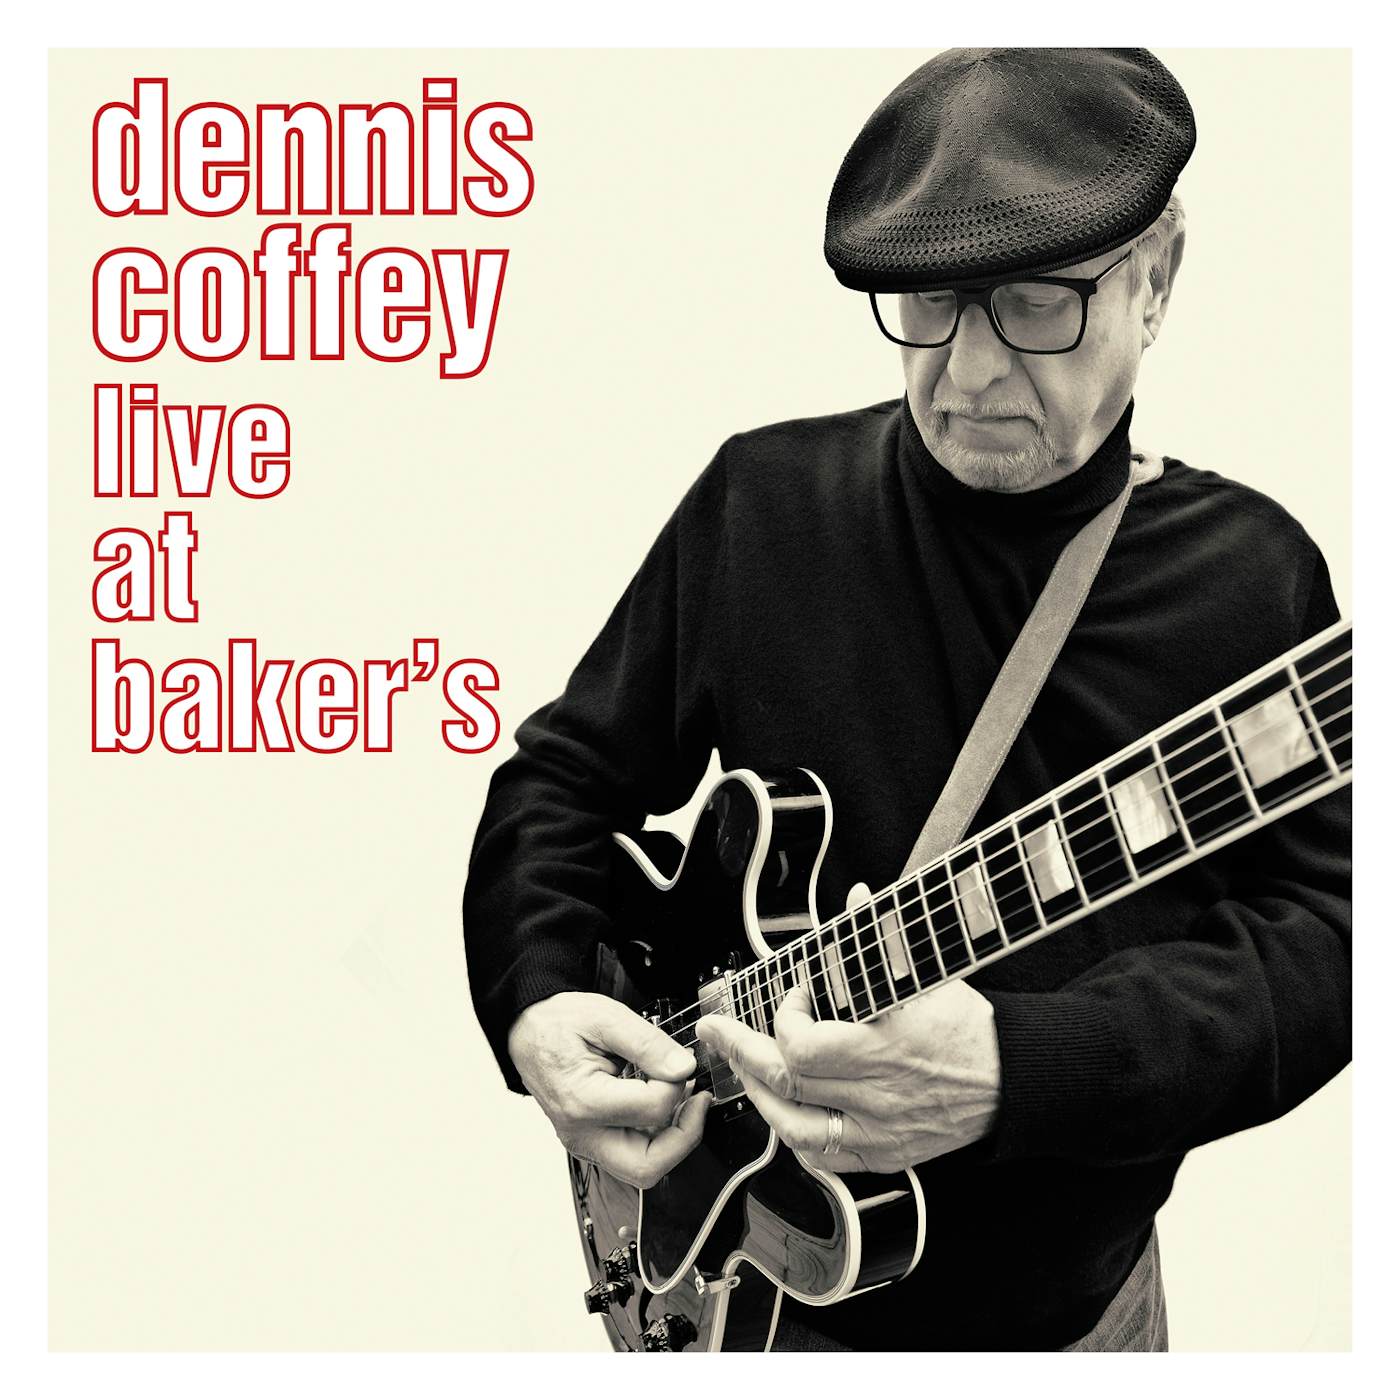 Dennis Coffey LIVE AT BAKER'S CD